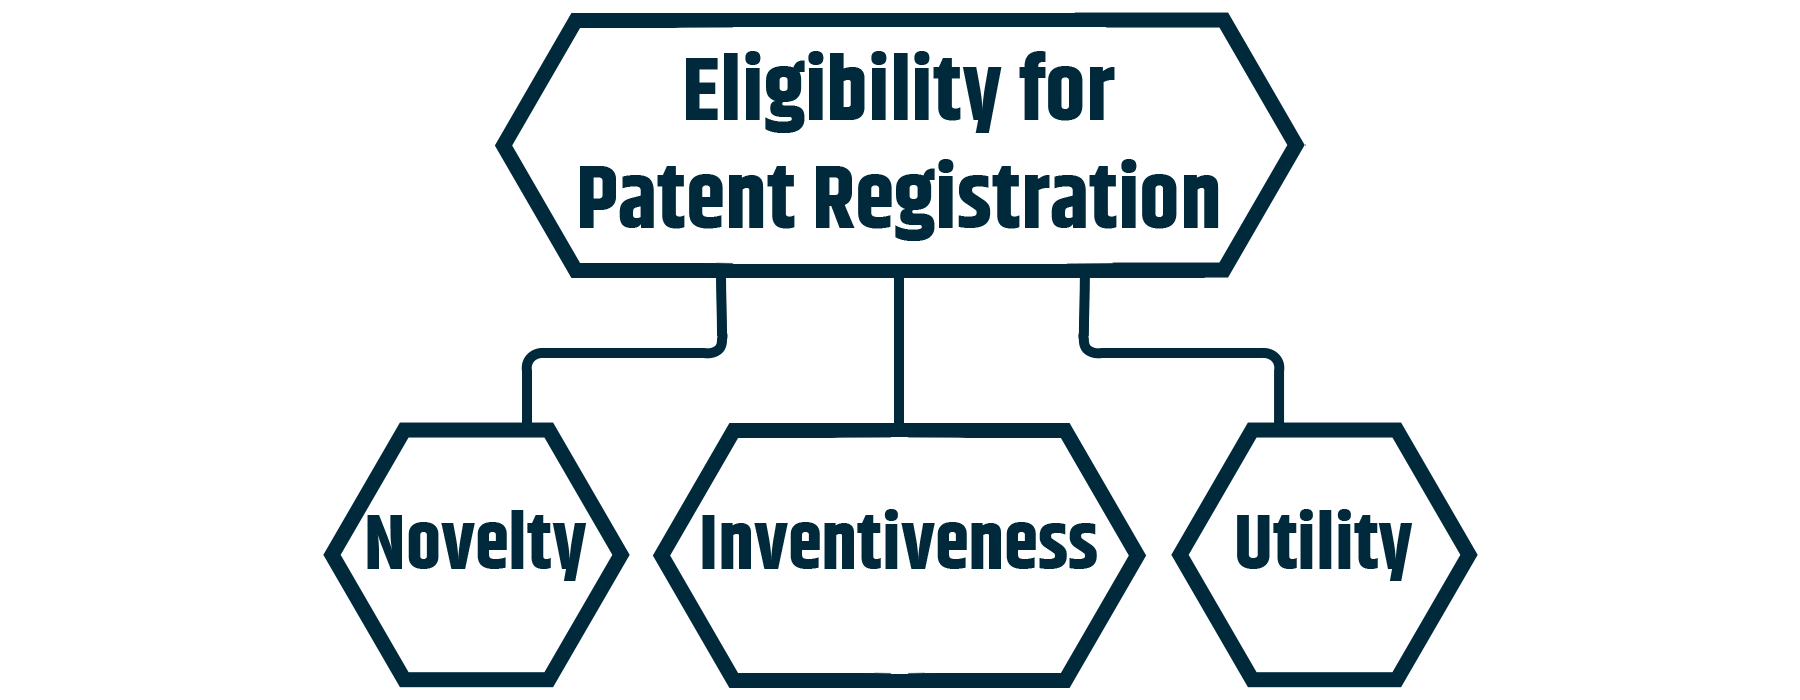 The elegibility criteria for patent complete registration 